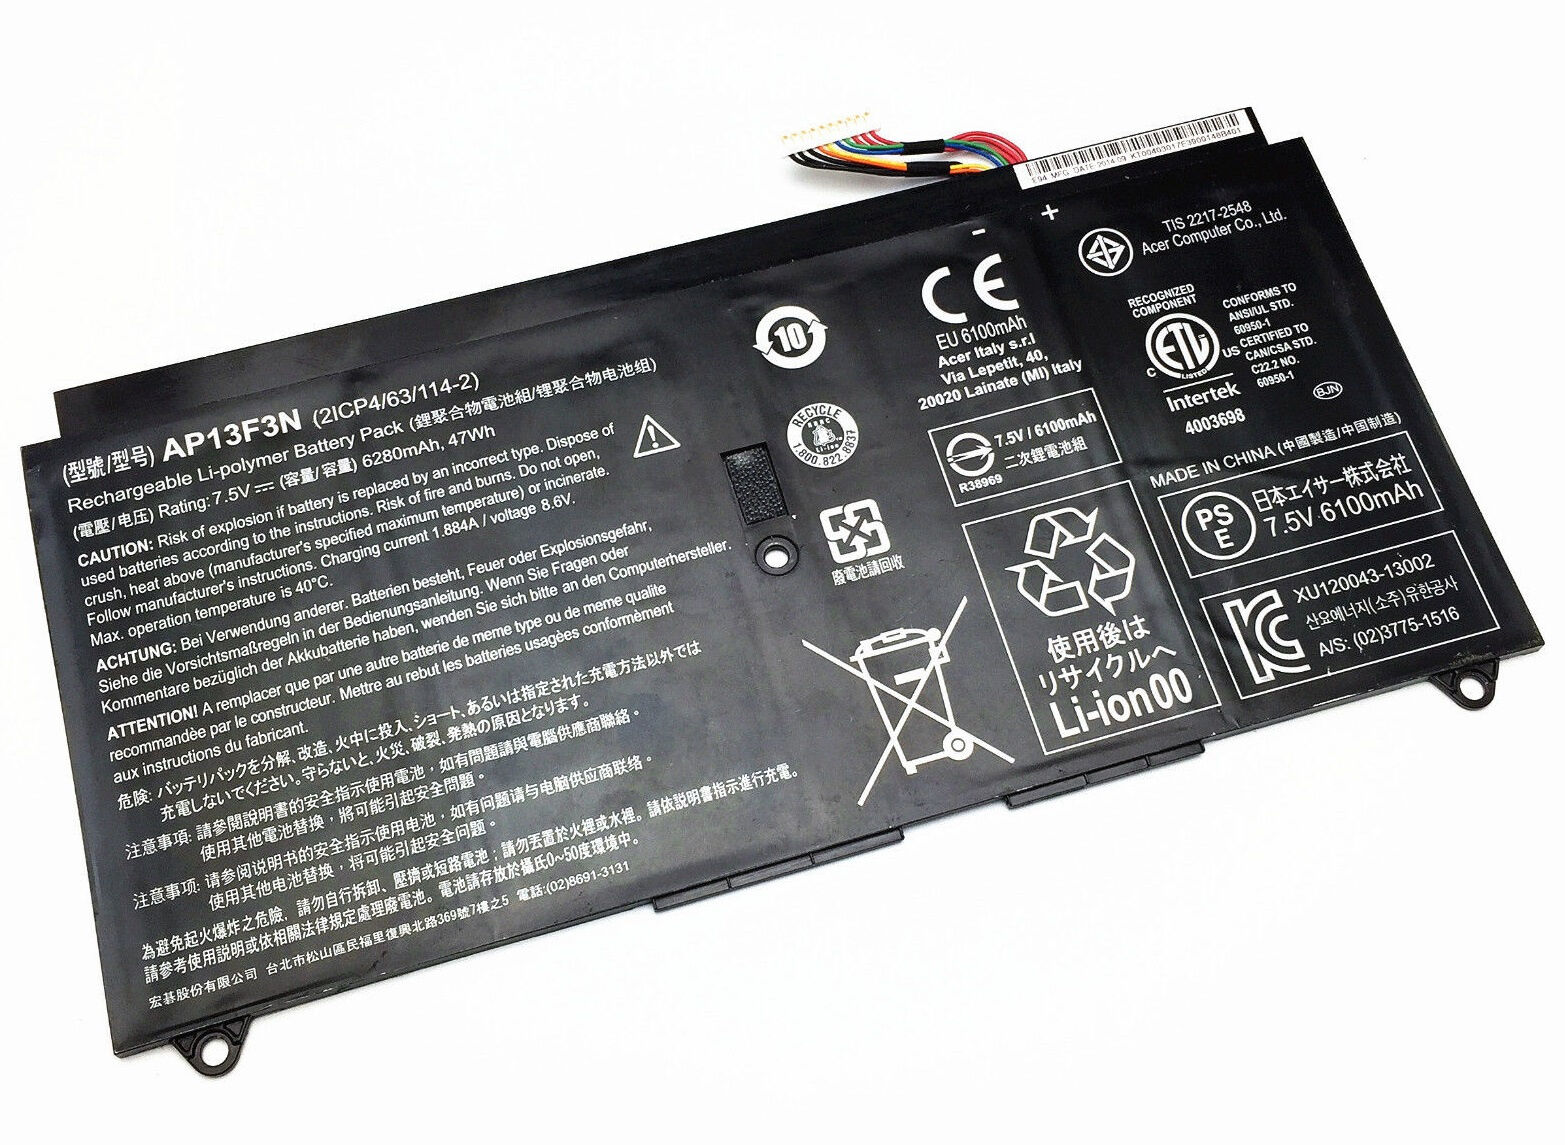 Аккумулятор для Acer S7-392 (7.5V 6280mAh) ORG p/n: 21CP4/63/114-2 AP13F3N